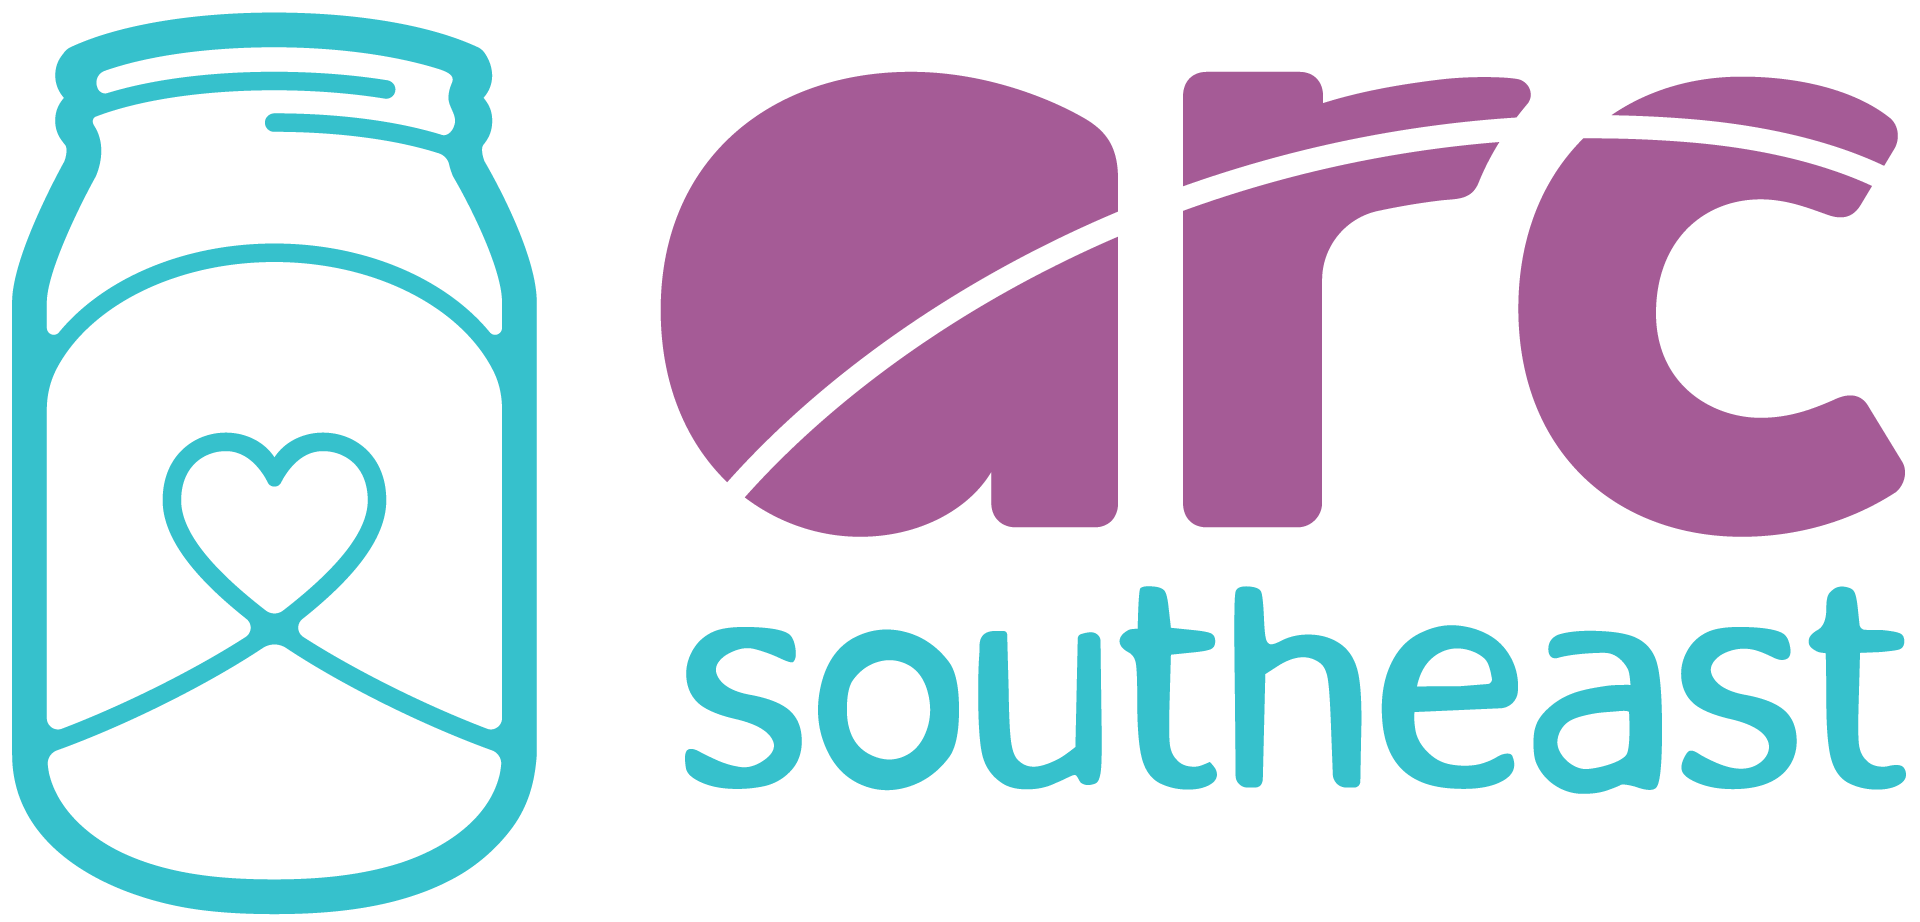 Access Reproductive Care - Southeast logo